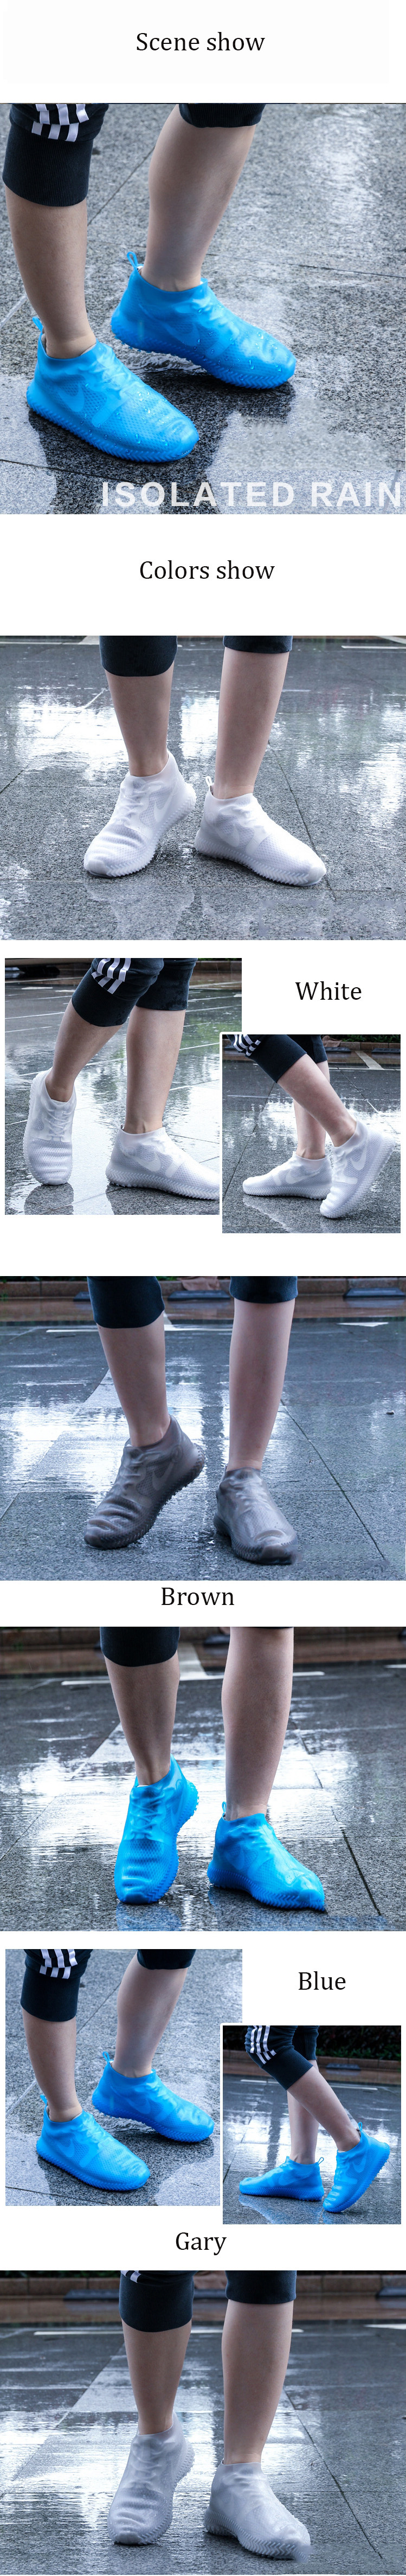 Silicone-Shoe-Covers-Outdoor-Waterproof-Rainproof-Dustproof-Shoe-Cover-Skid-Thickening-Wear-resistin-1531238-2